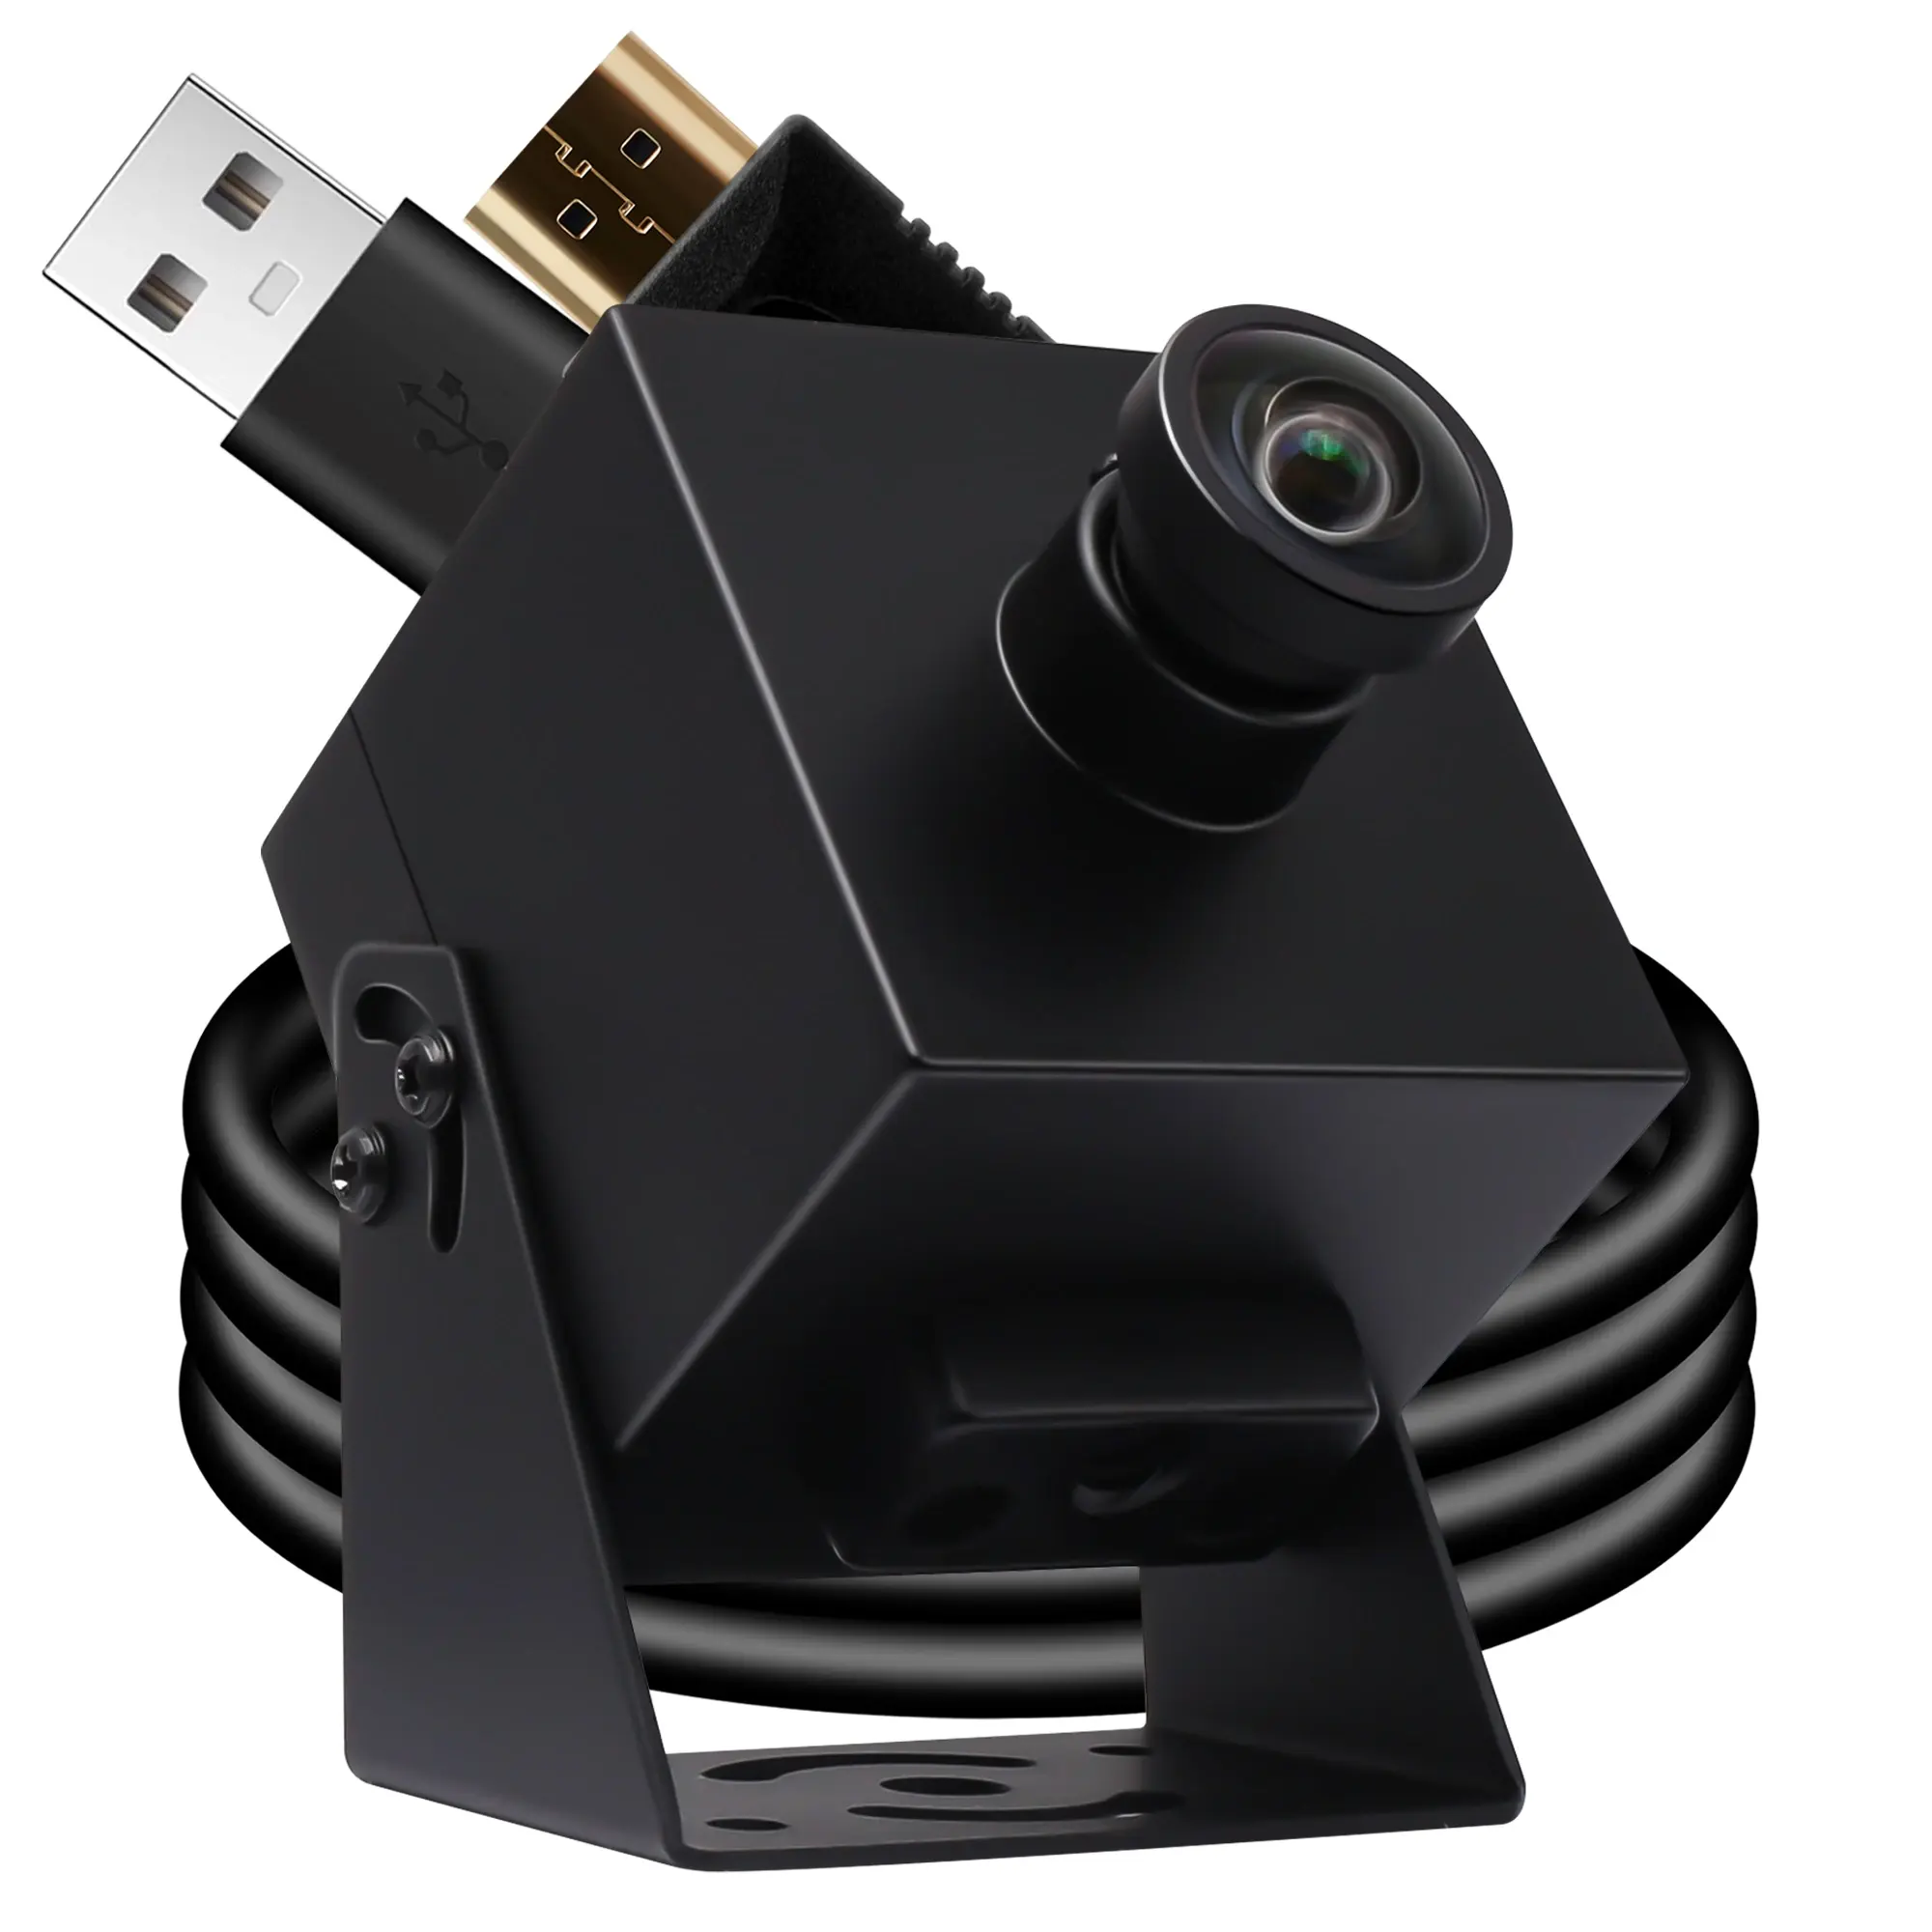 ELP 4K USBHDMIカメラ12mm/16mm/25mmモニターWebcam2XデジタルズームUltra HD H.264 2160P 30fps for Play Tablet Laptop PC